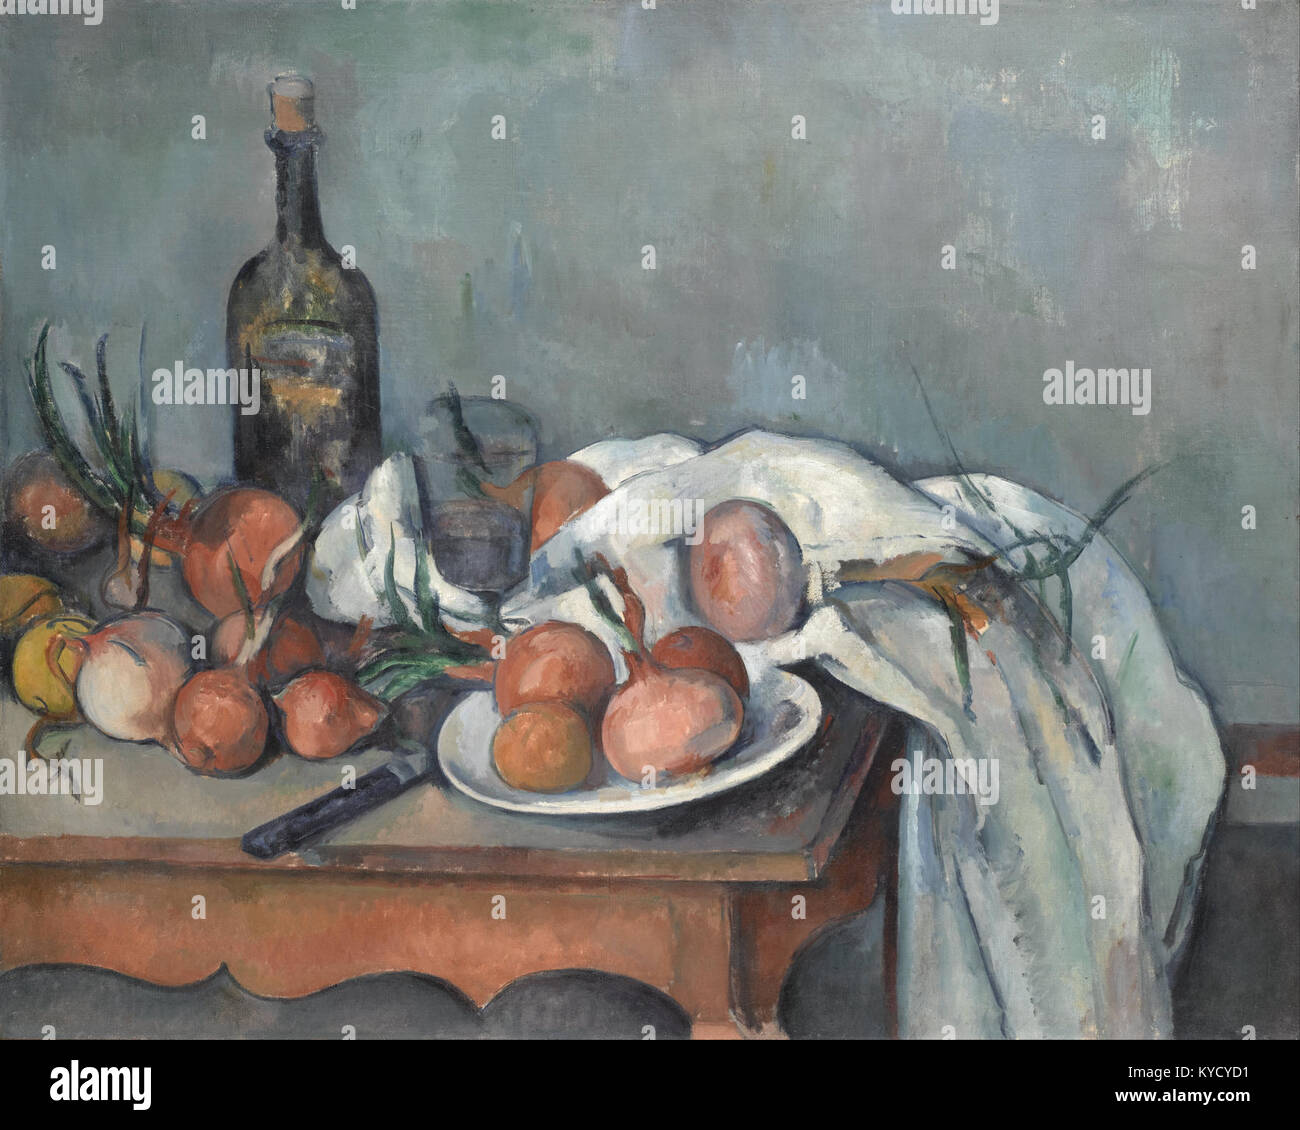 Paul Cézanne - Still Life with Onions - Google Art Project Stock Photo